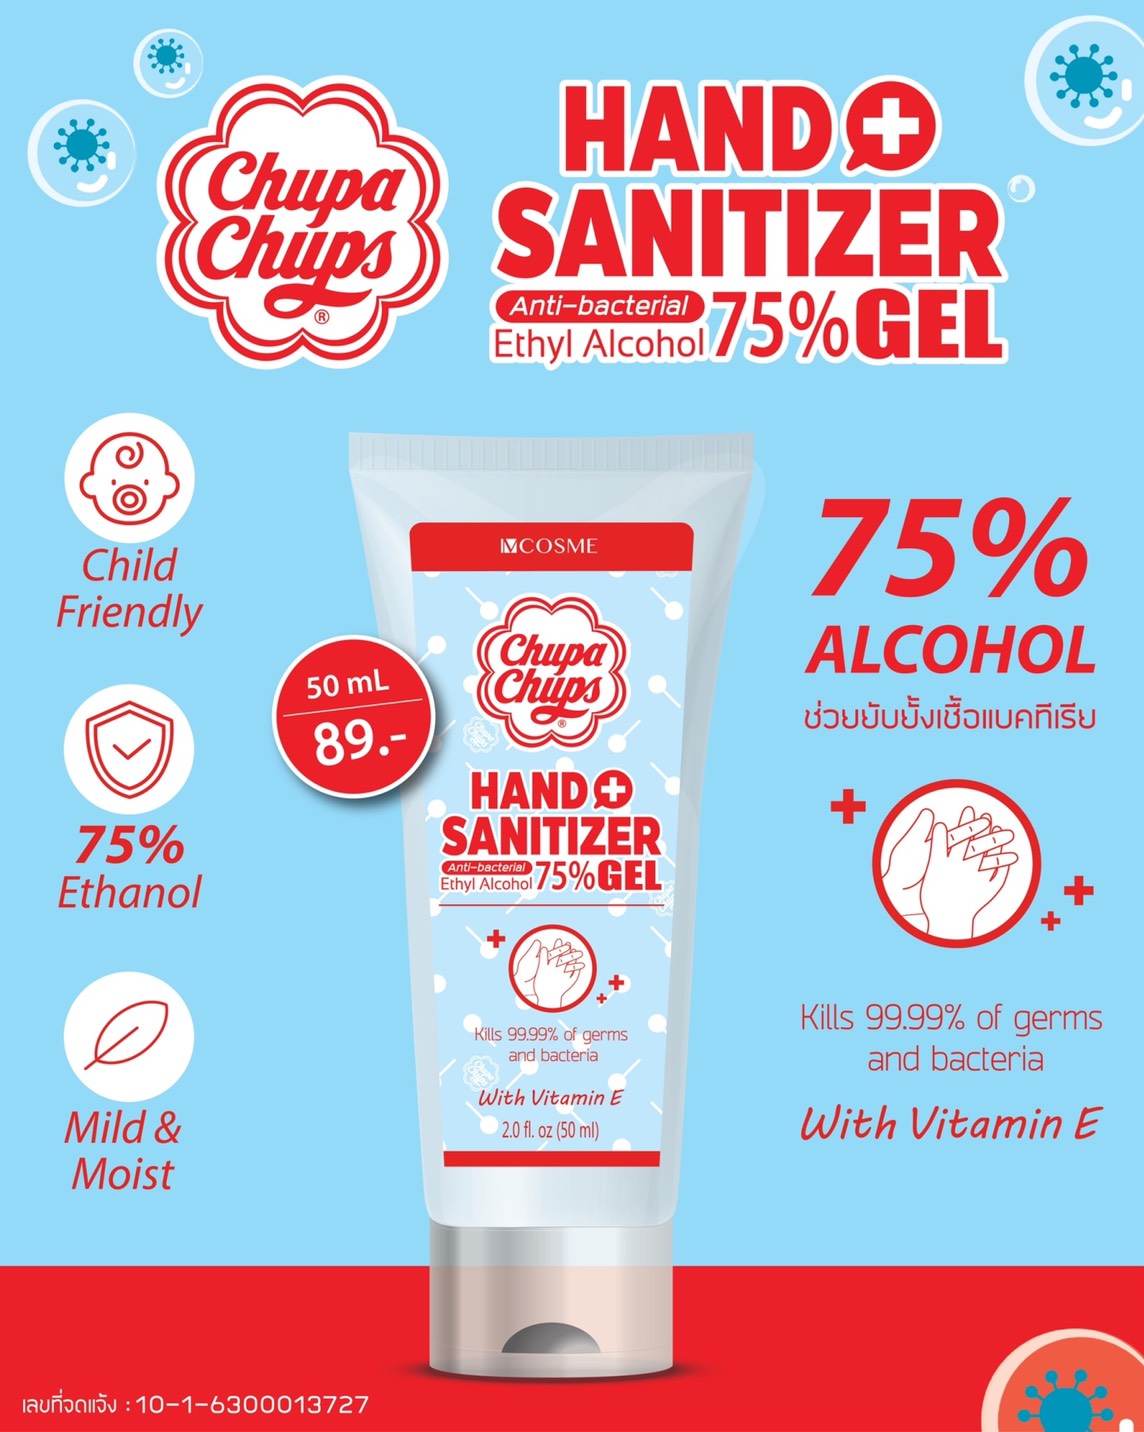 Chupa Chups Hand Sanitizer 75% Gel 50ml เจลแอลกอฮอลล์ 75% ลดการสะสมของเชื้อไวรัสและแบคทีเรีย 99.99%